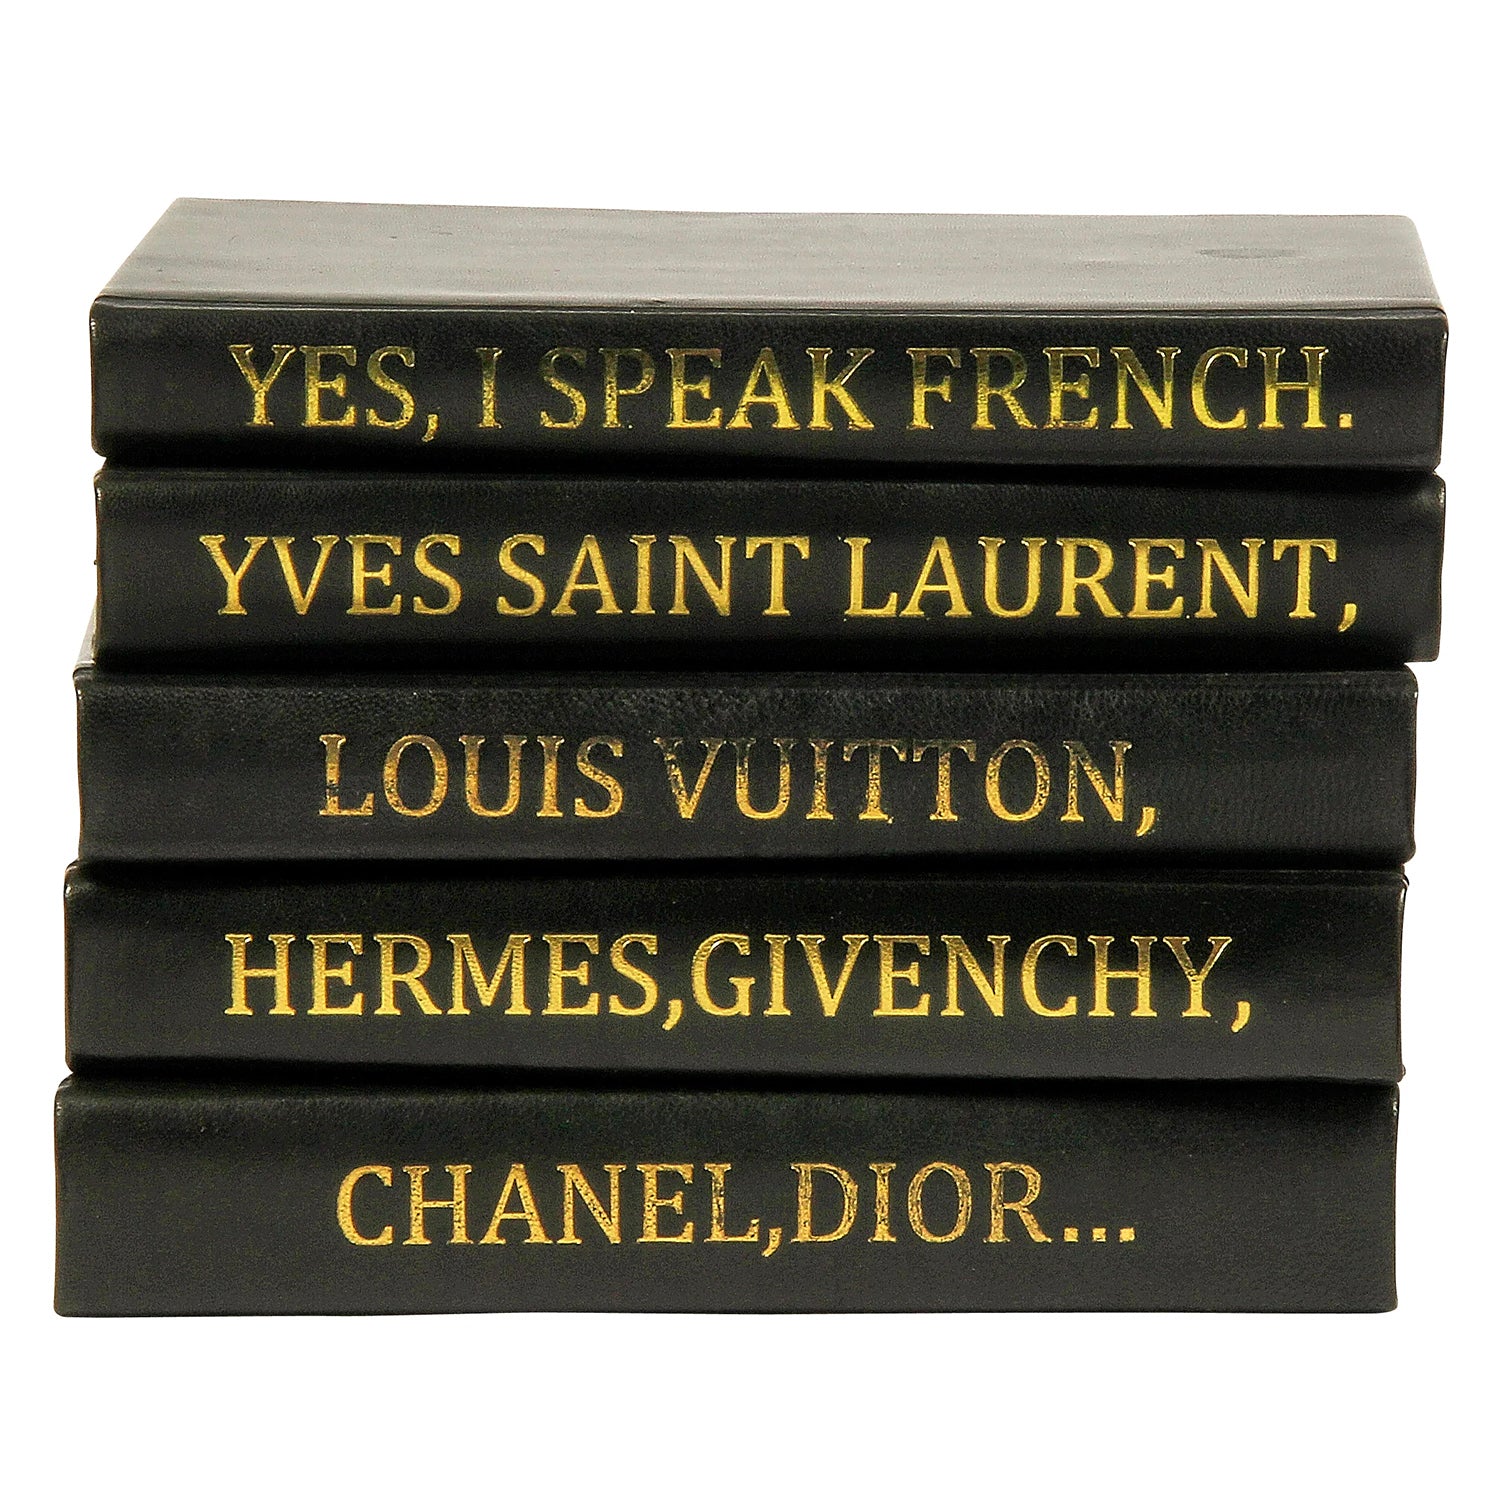 Chanel Louis Vuitton Books Decor